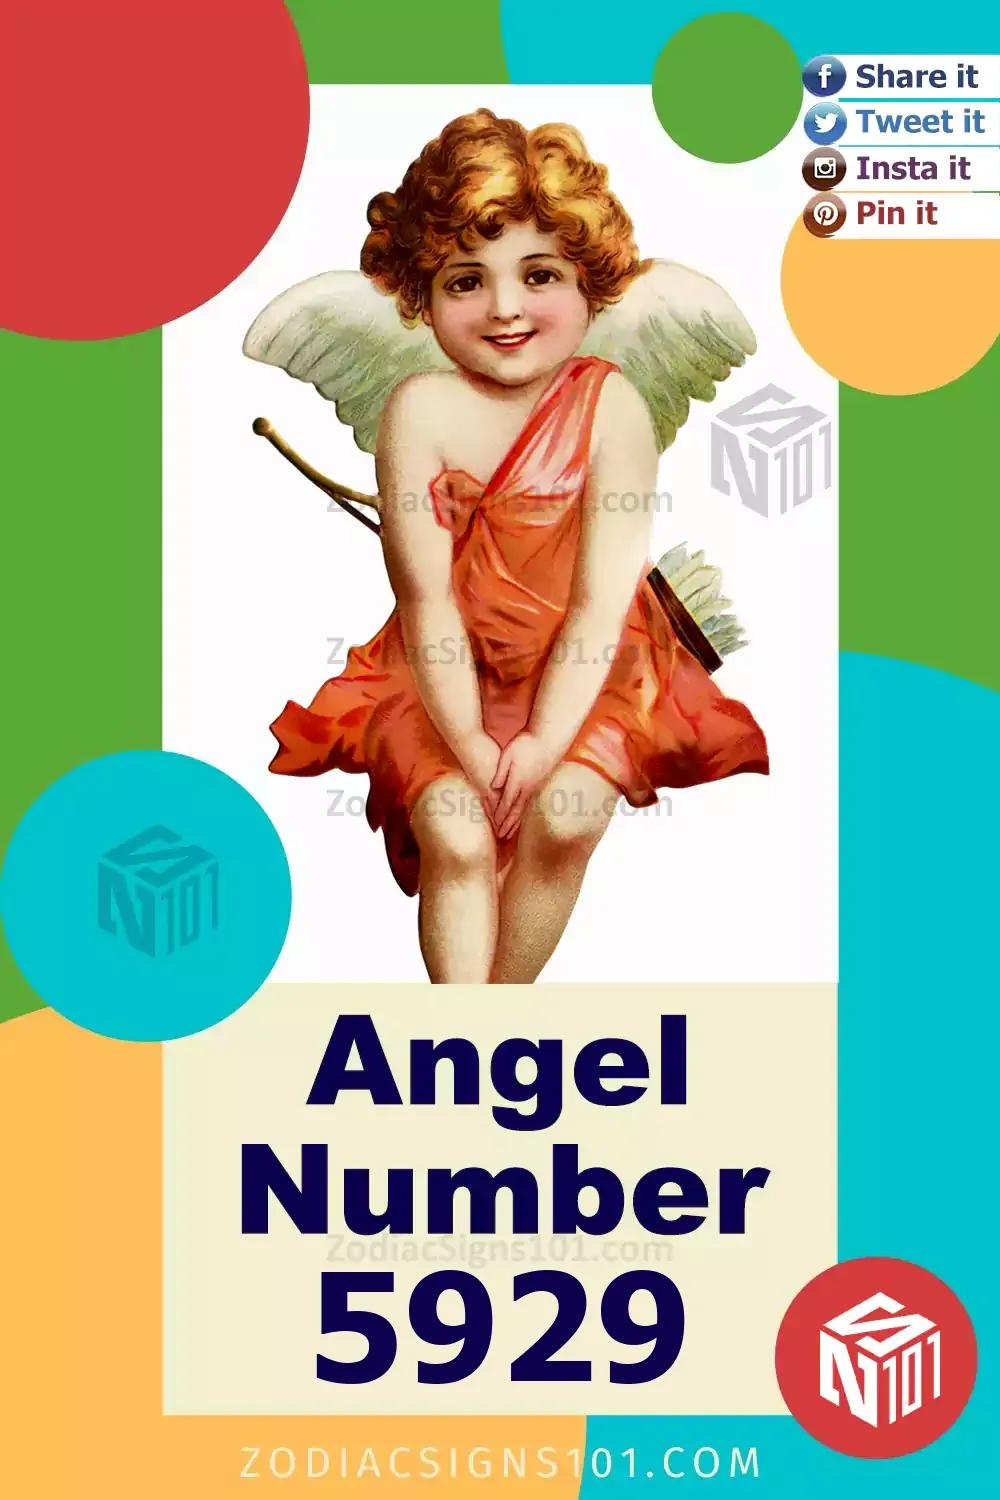 5929-Angel-Number-Meaning.jpg